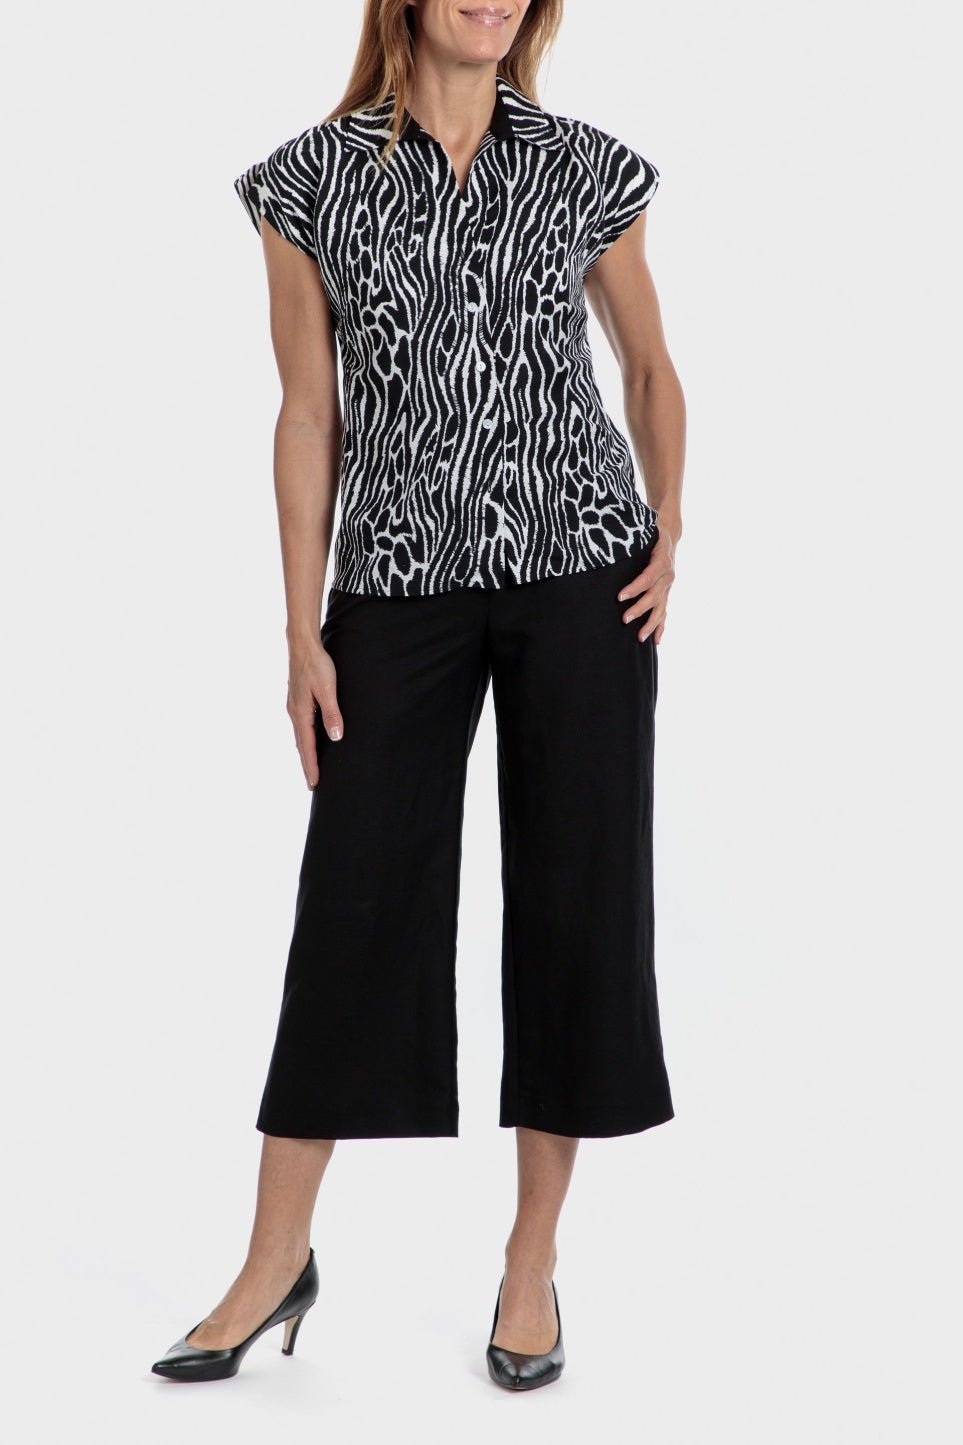 PUNT ROMA - מכנסי אלגנט בצבע שחור - MASHBIR//365